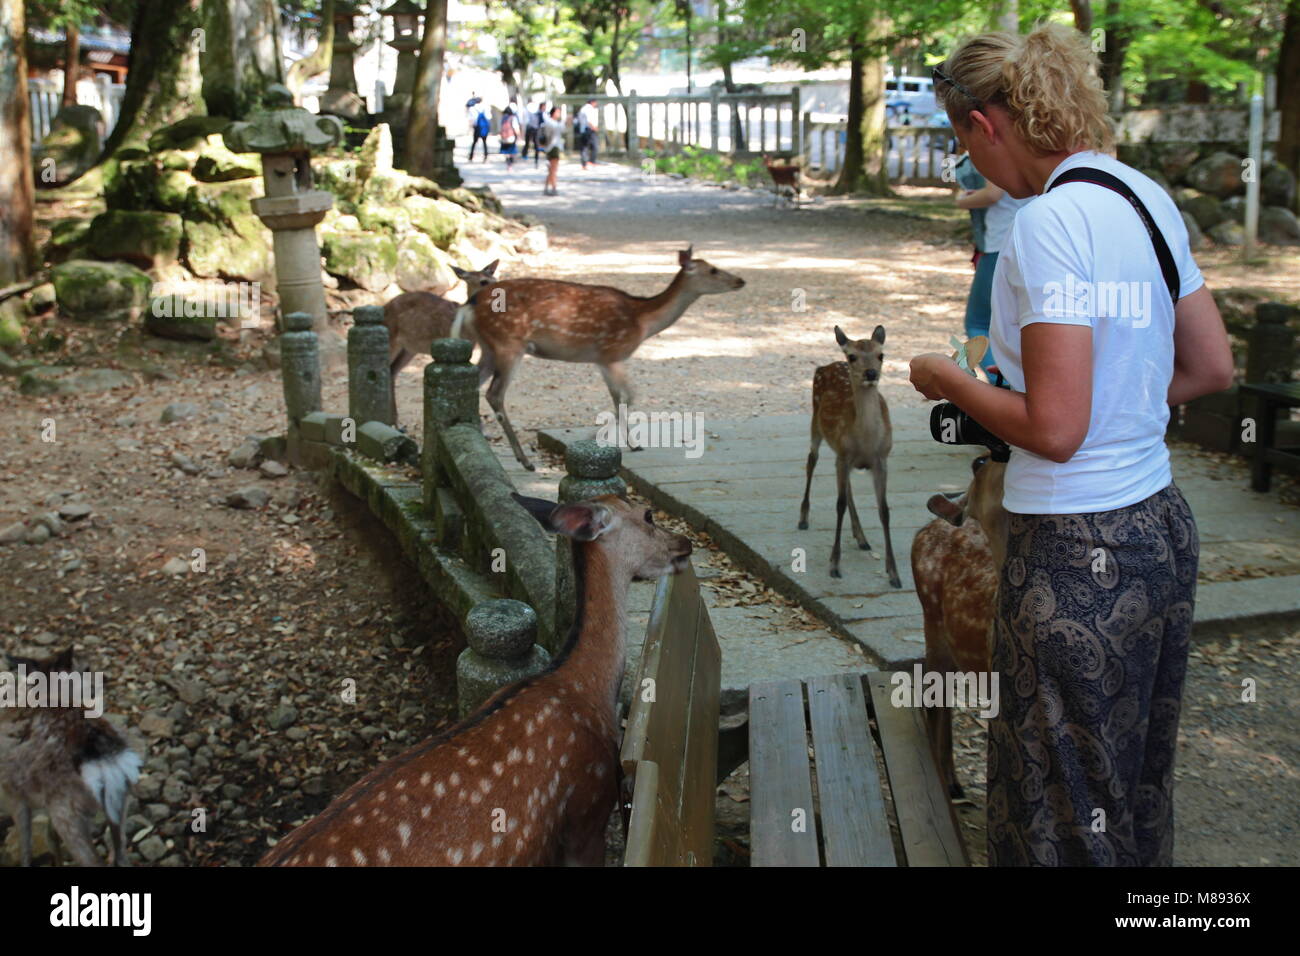 European tourist feed wild Sika deer in Nara, Japan. Nara is a major tourism destination in Japan. Stock Photo